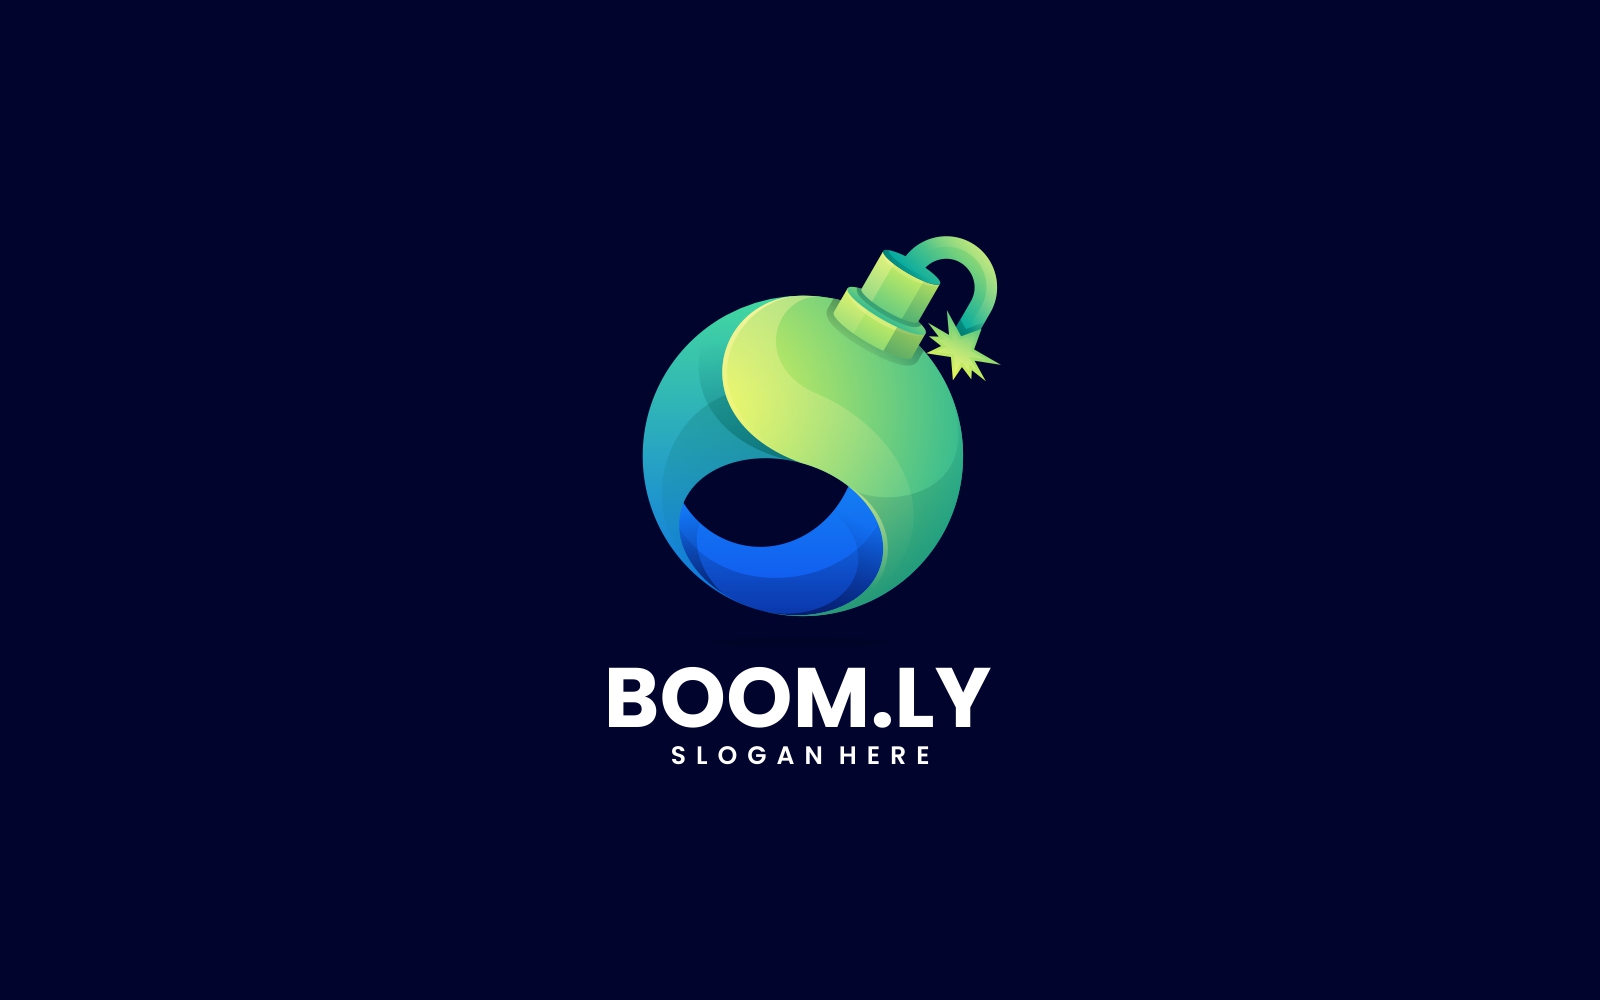 Boom Gradient Colorful Logo